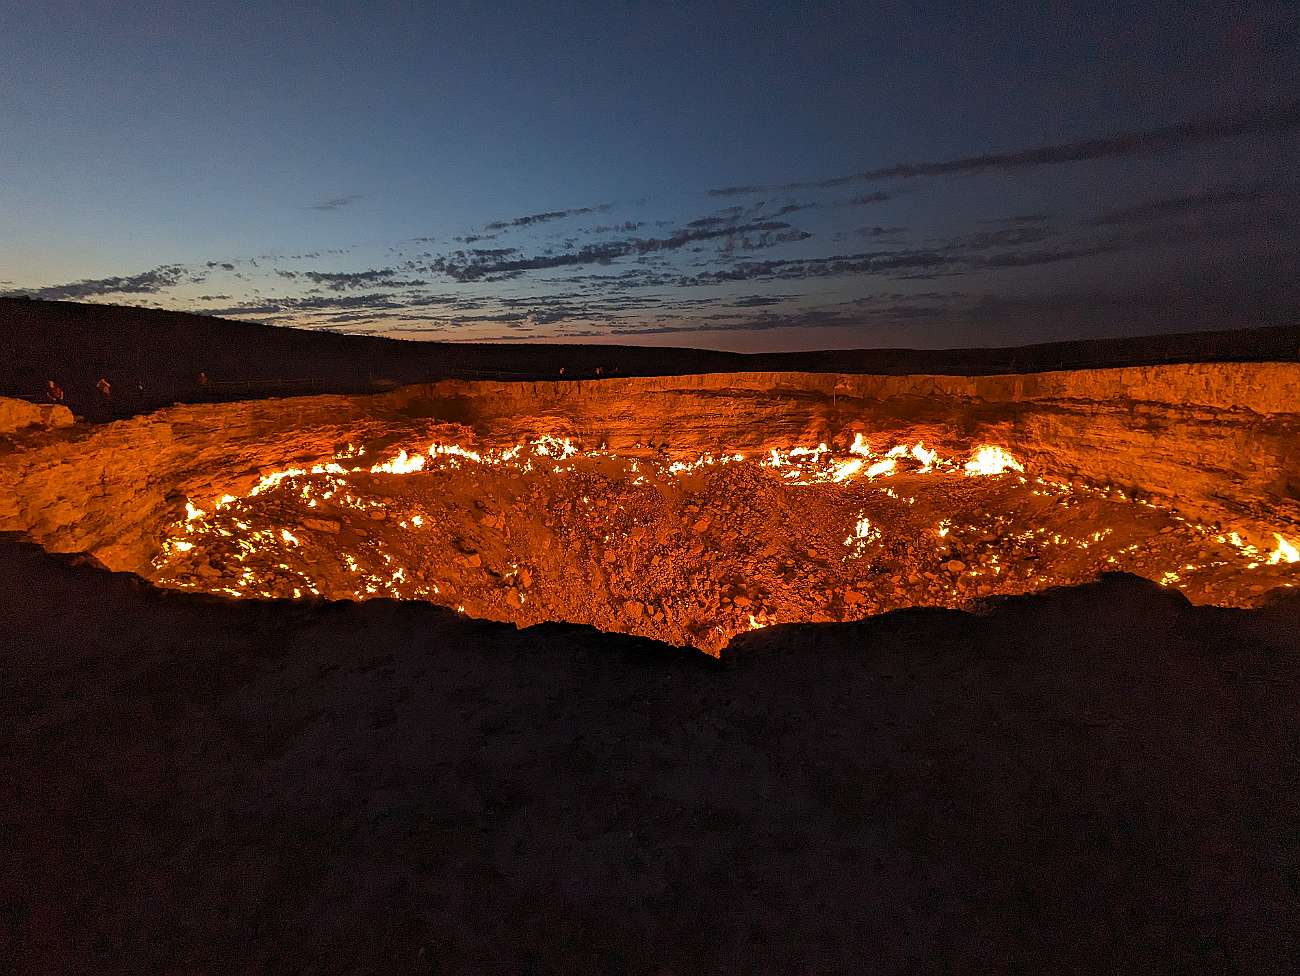 The Gates of Hell (Darwaza, Turkmenistan) - at night